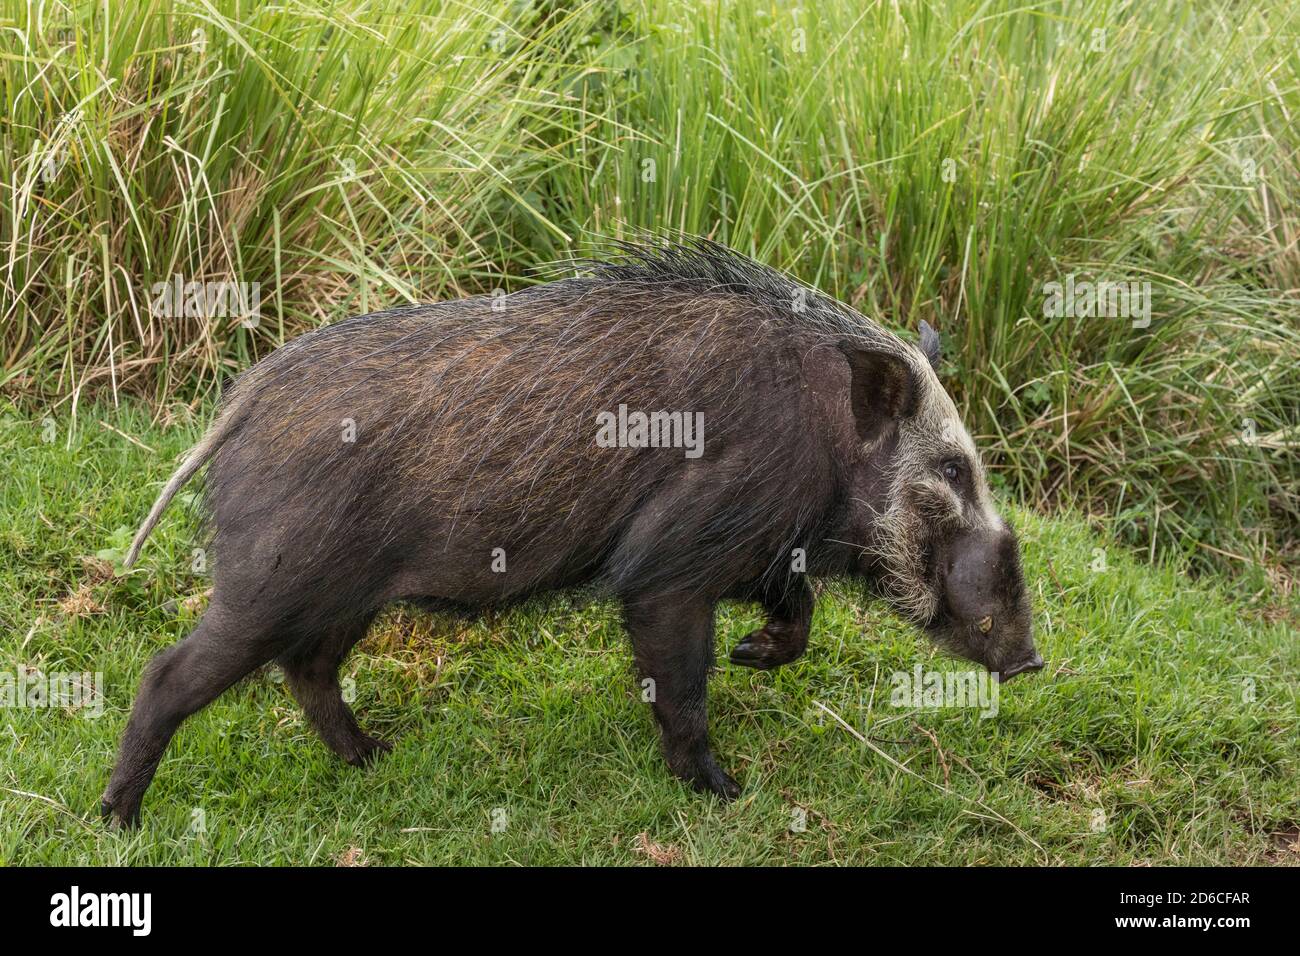 Adult bush pig walking in green grass looking alert in Ngorongoro Crater in Tanzania Stock Photo